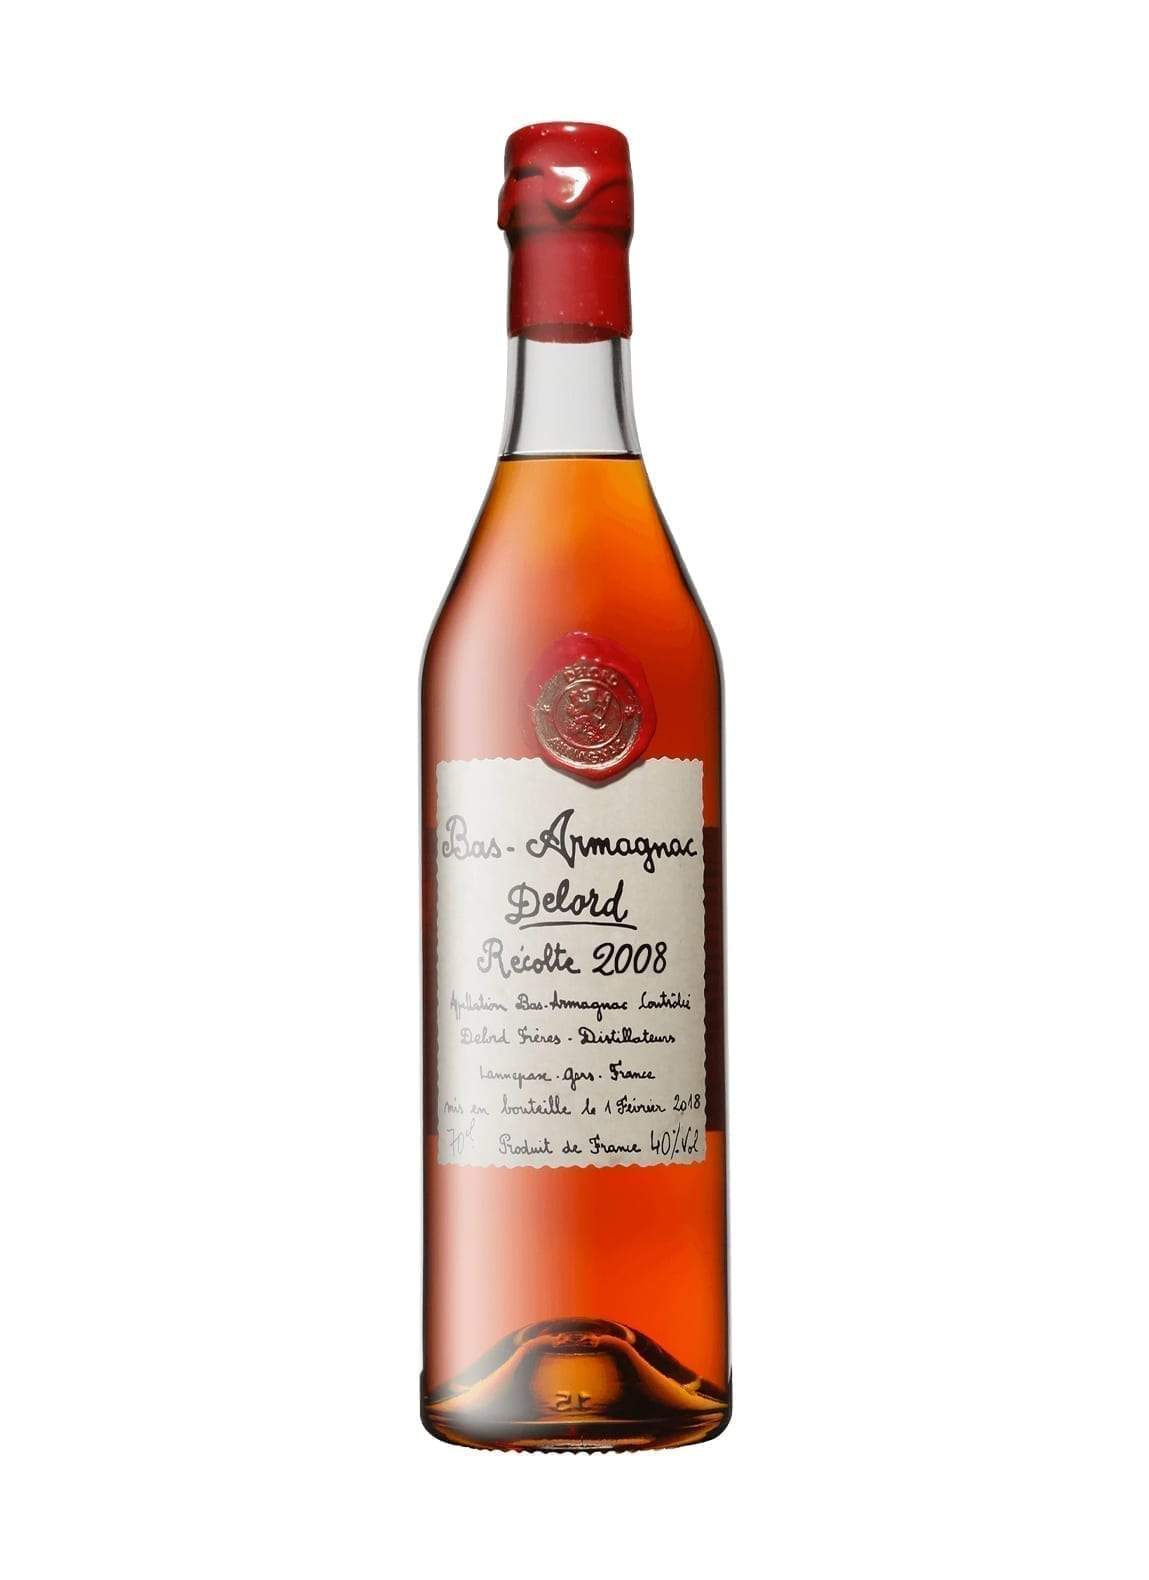 Delord 2008 Bas Armagnac 40% 700ml | Brandy | Shop online at Spirits of France